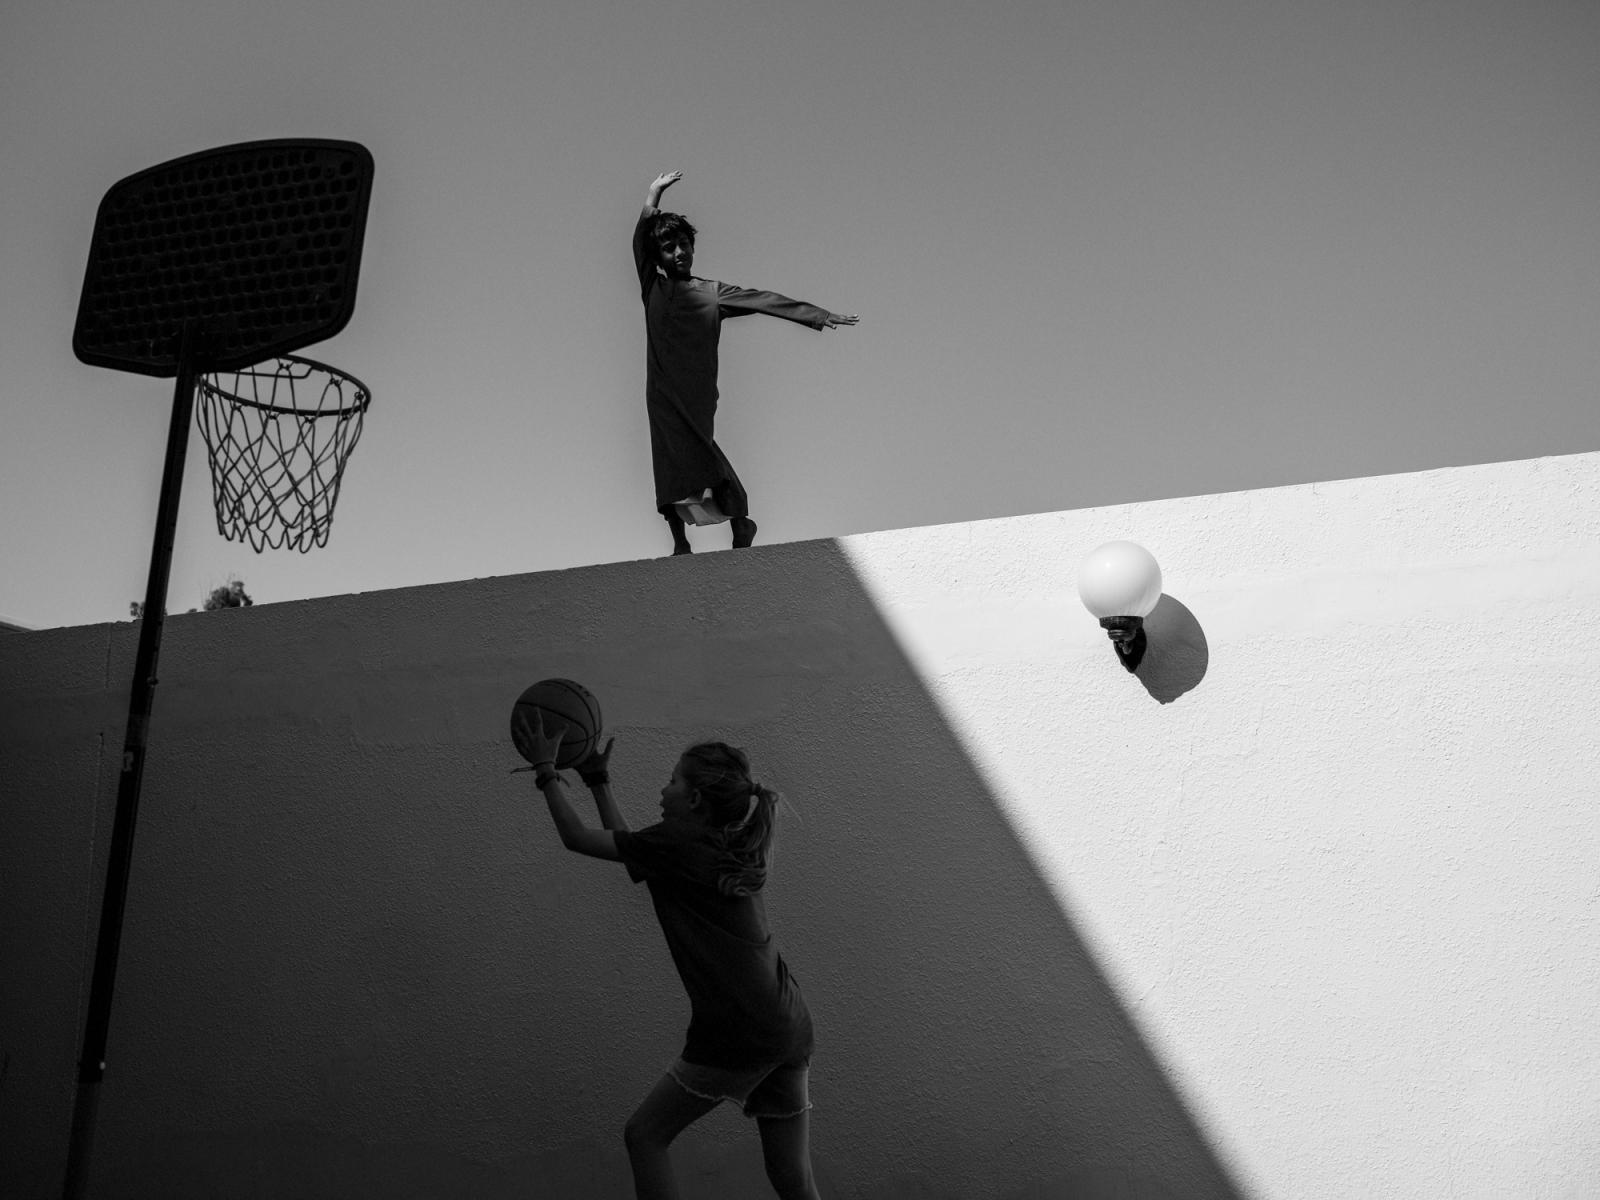 Zayed and Astrid playing basketball